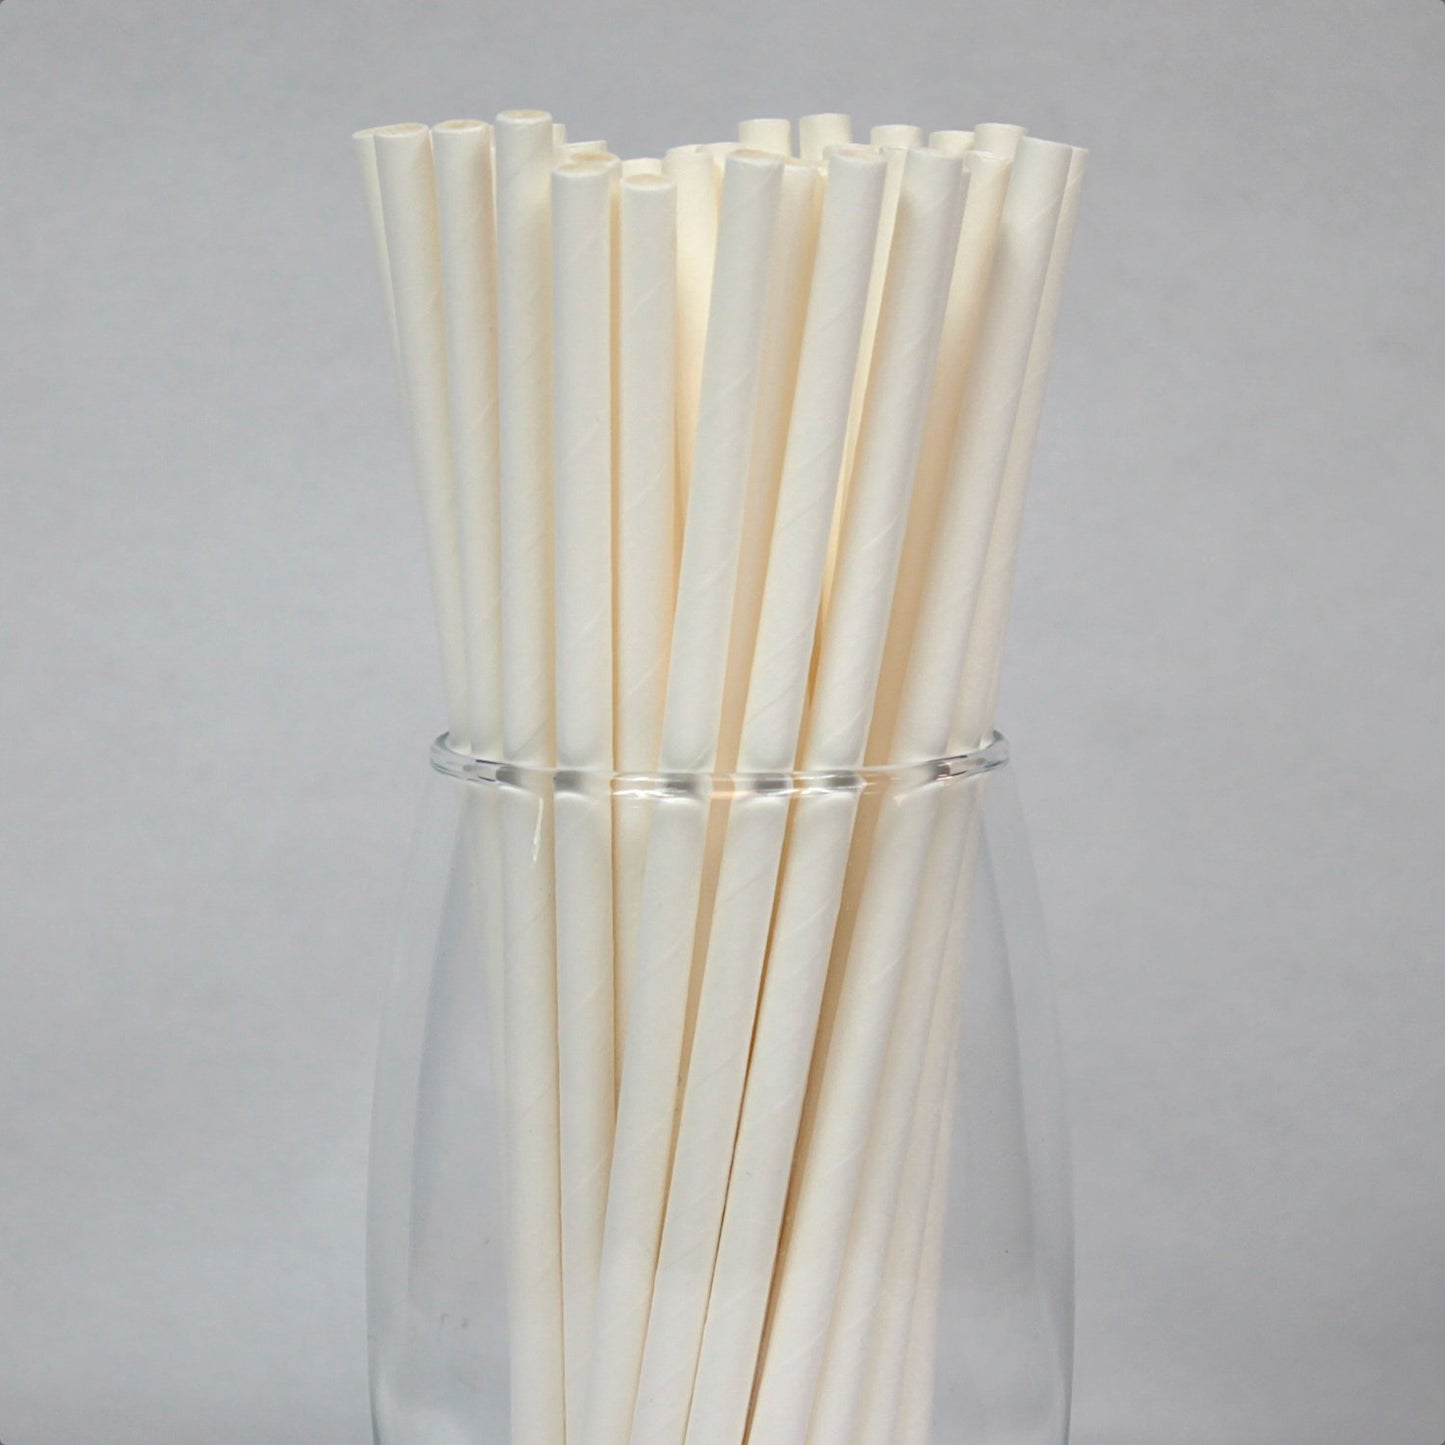 White Paper Straws (6mm x 200mm) - Quality Drinking Straws - Intrinsic Paper Straws